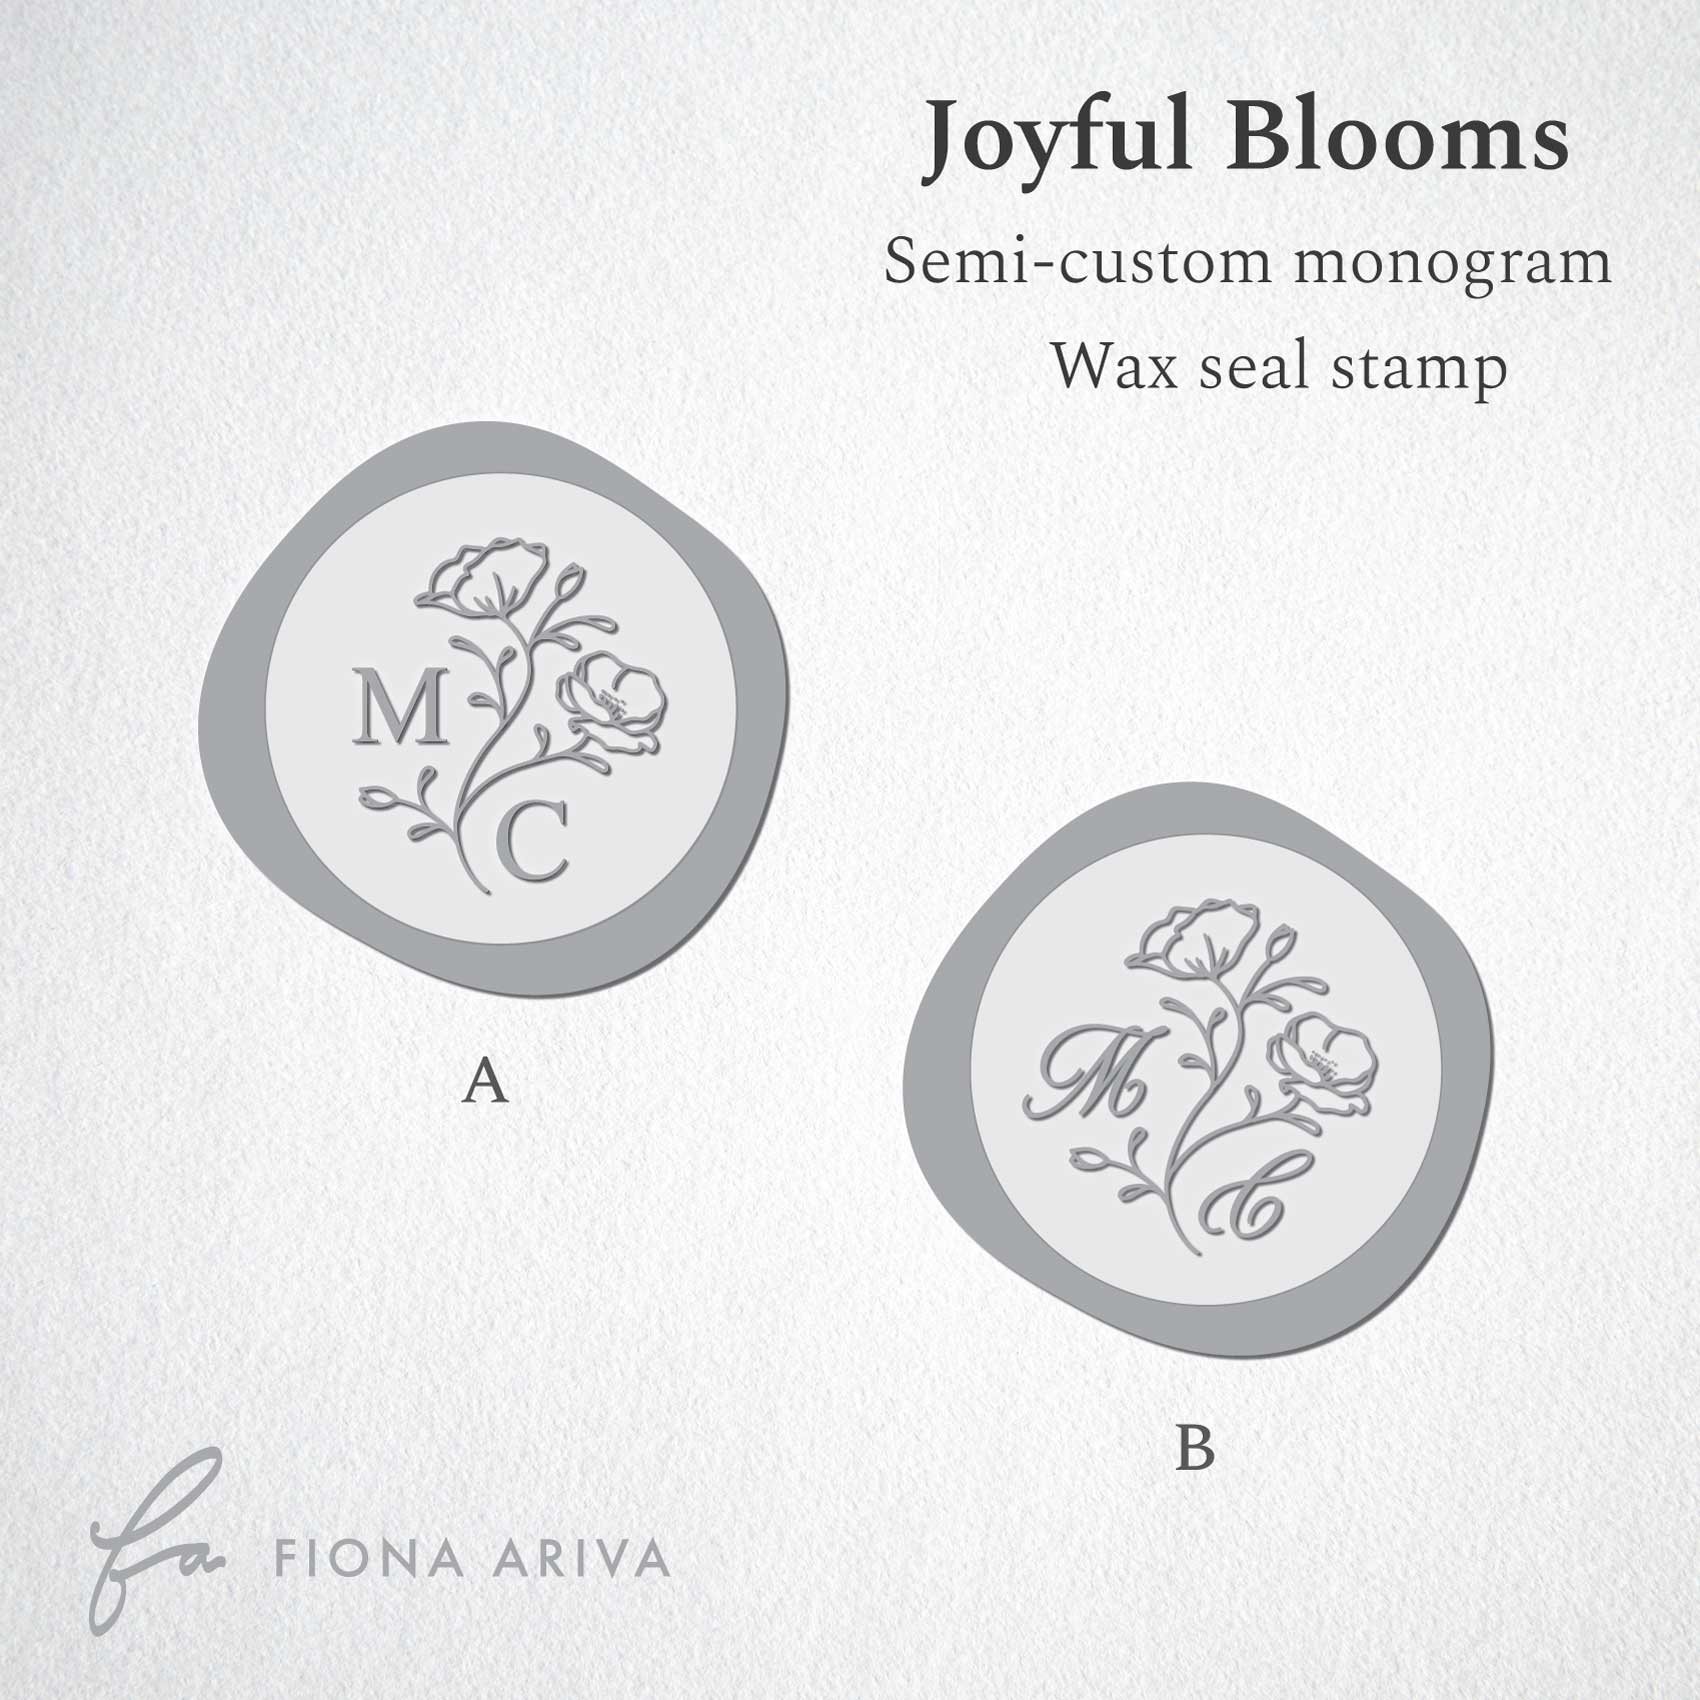 Joyful Blooms wedding monogram semi custom initials wax seal stamp or kit